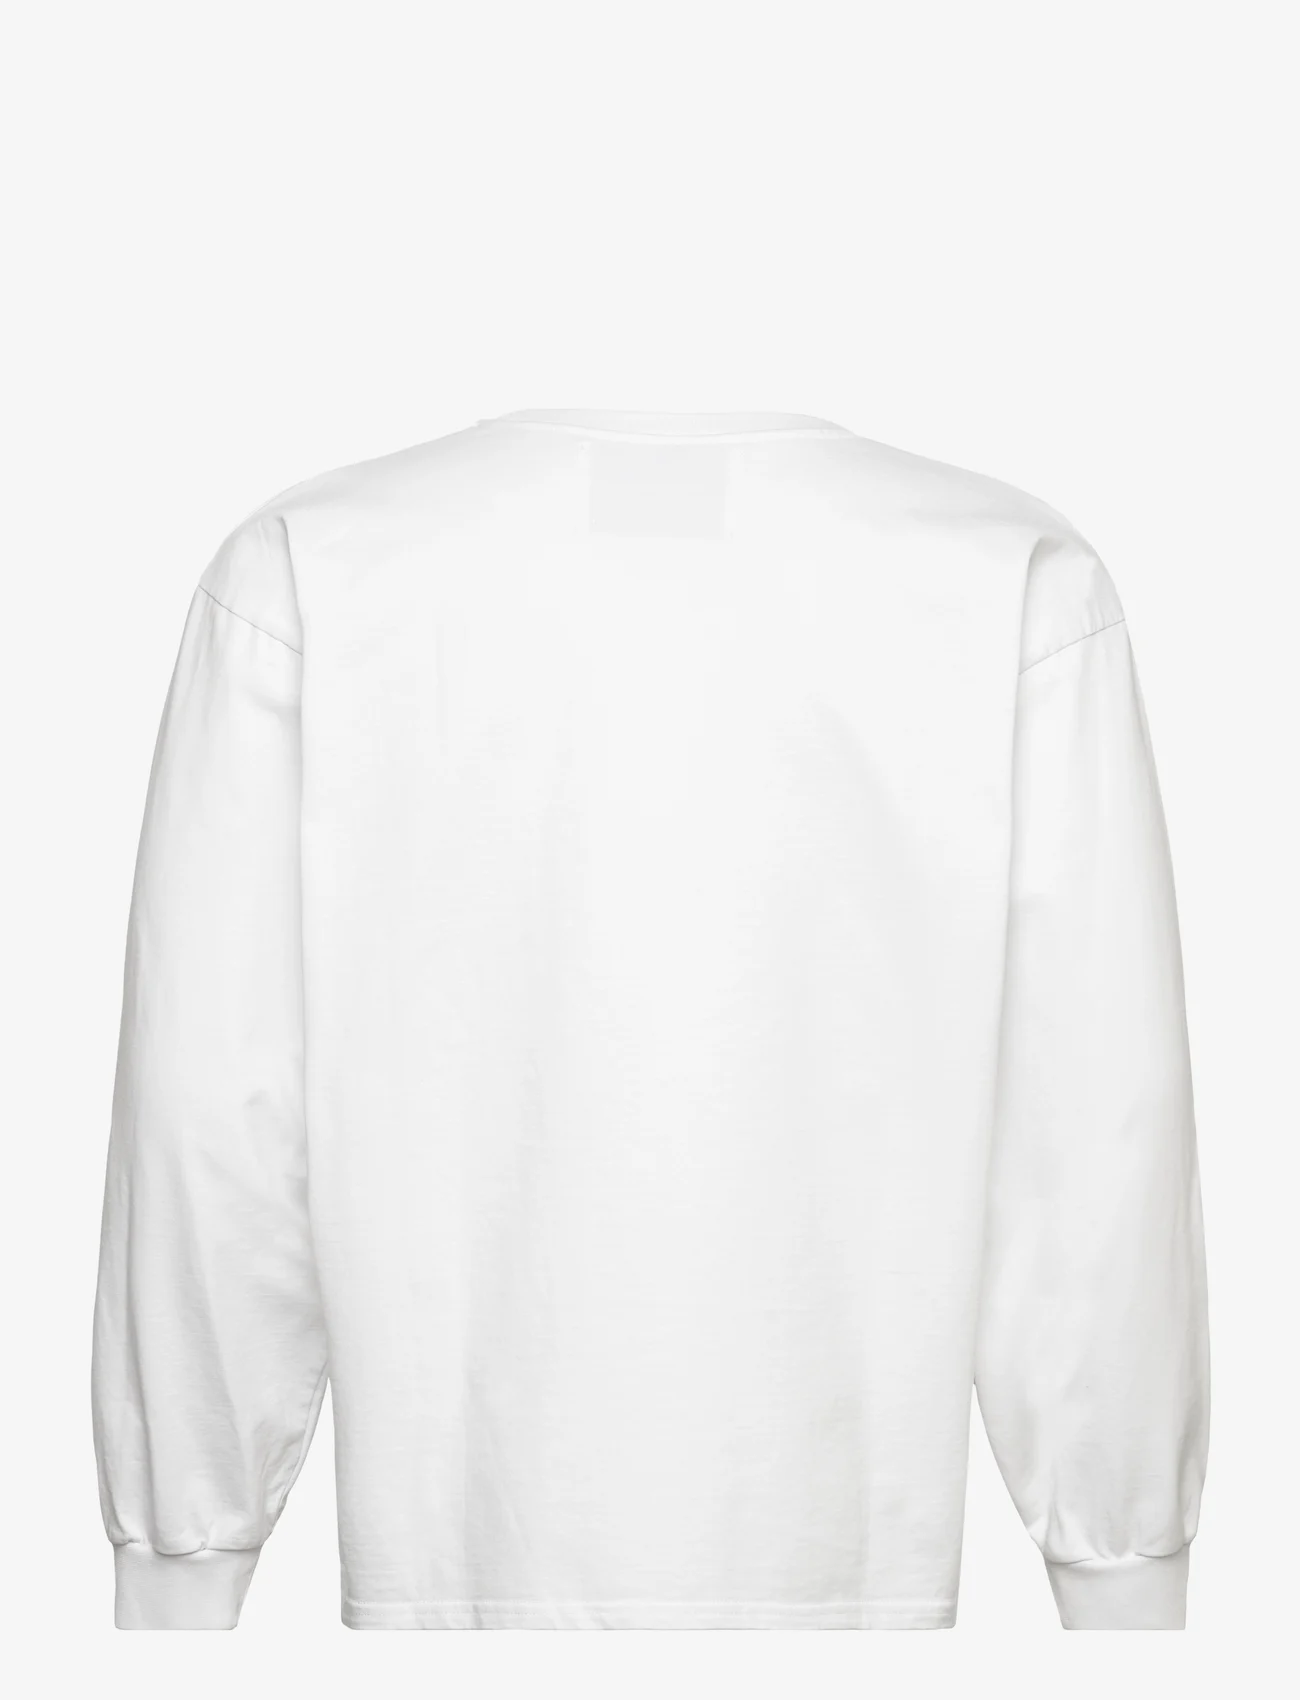 Garment Project - Heavy L/S Tee - White - marškinėliai ilgomis rankovėmis - white - 1